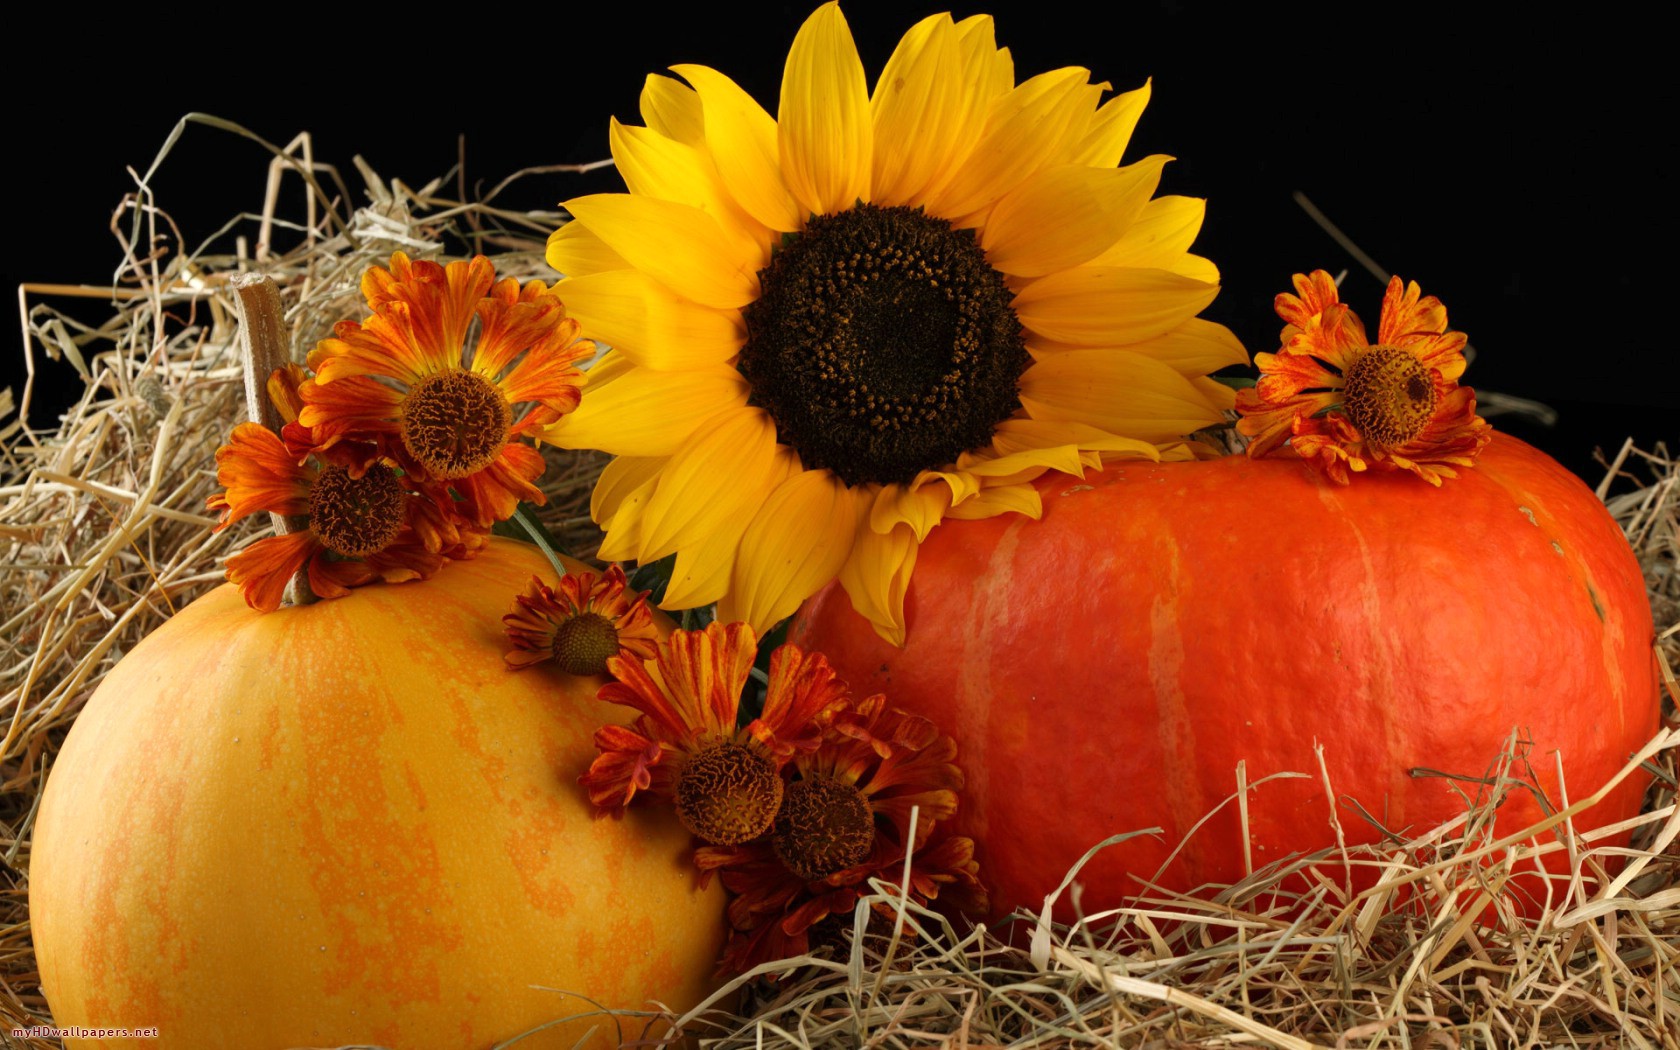 My HD Wallpaper Archive Sunflower And Pumpkins